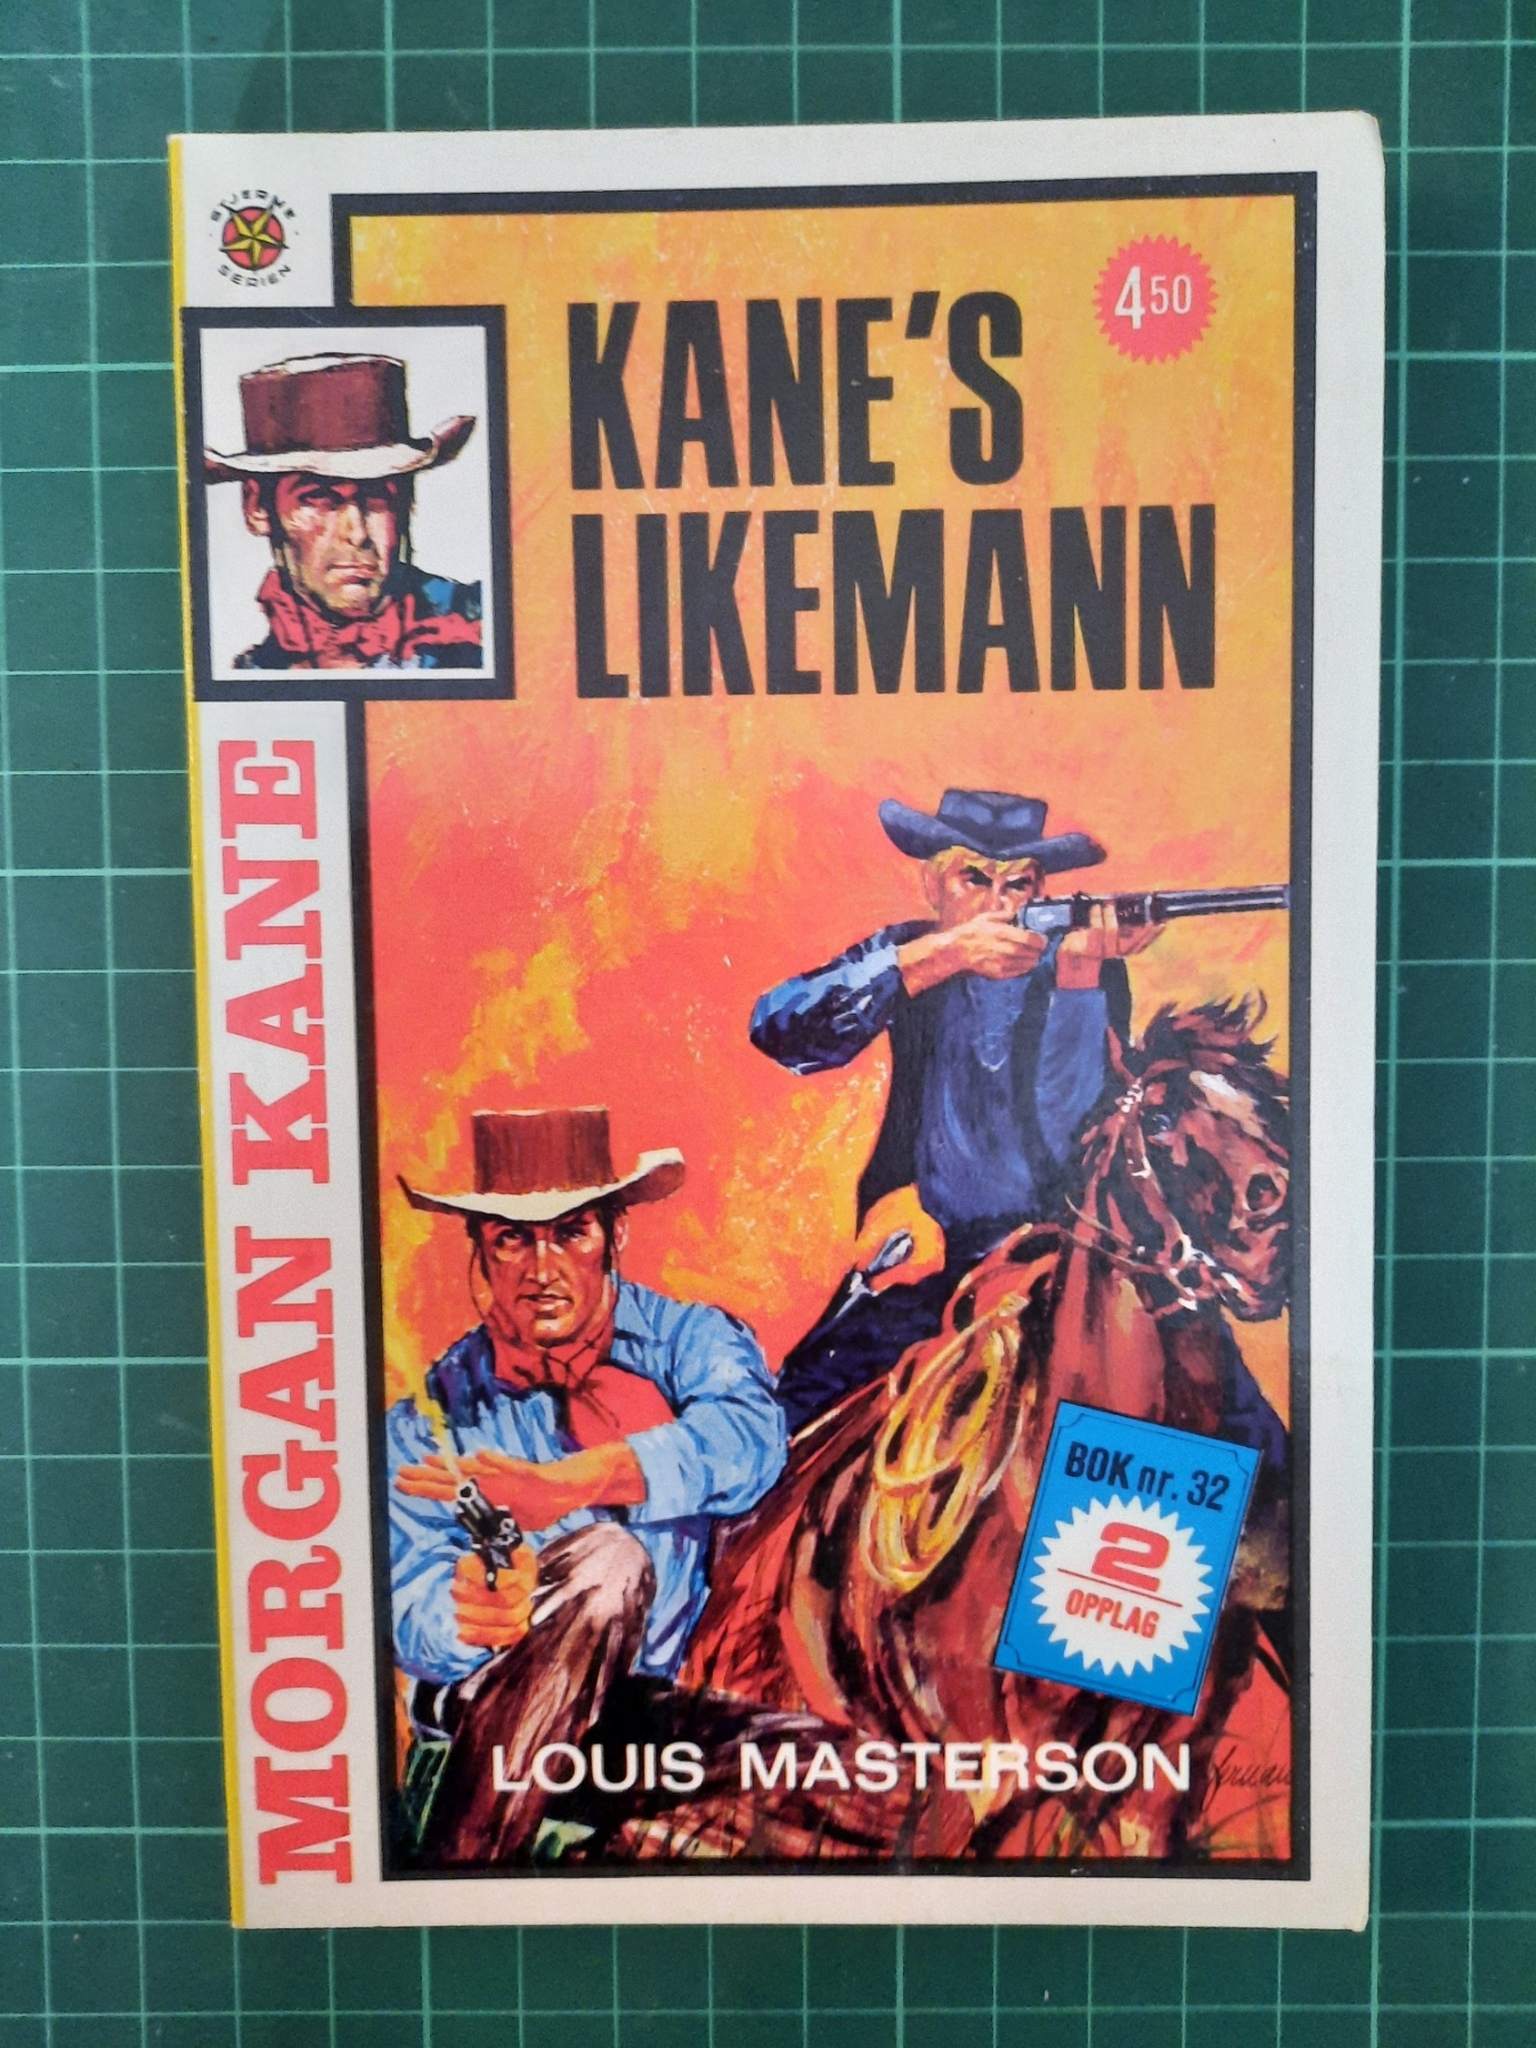 Morgan Kane pocket 32 - Kane's likemann